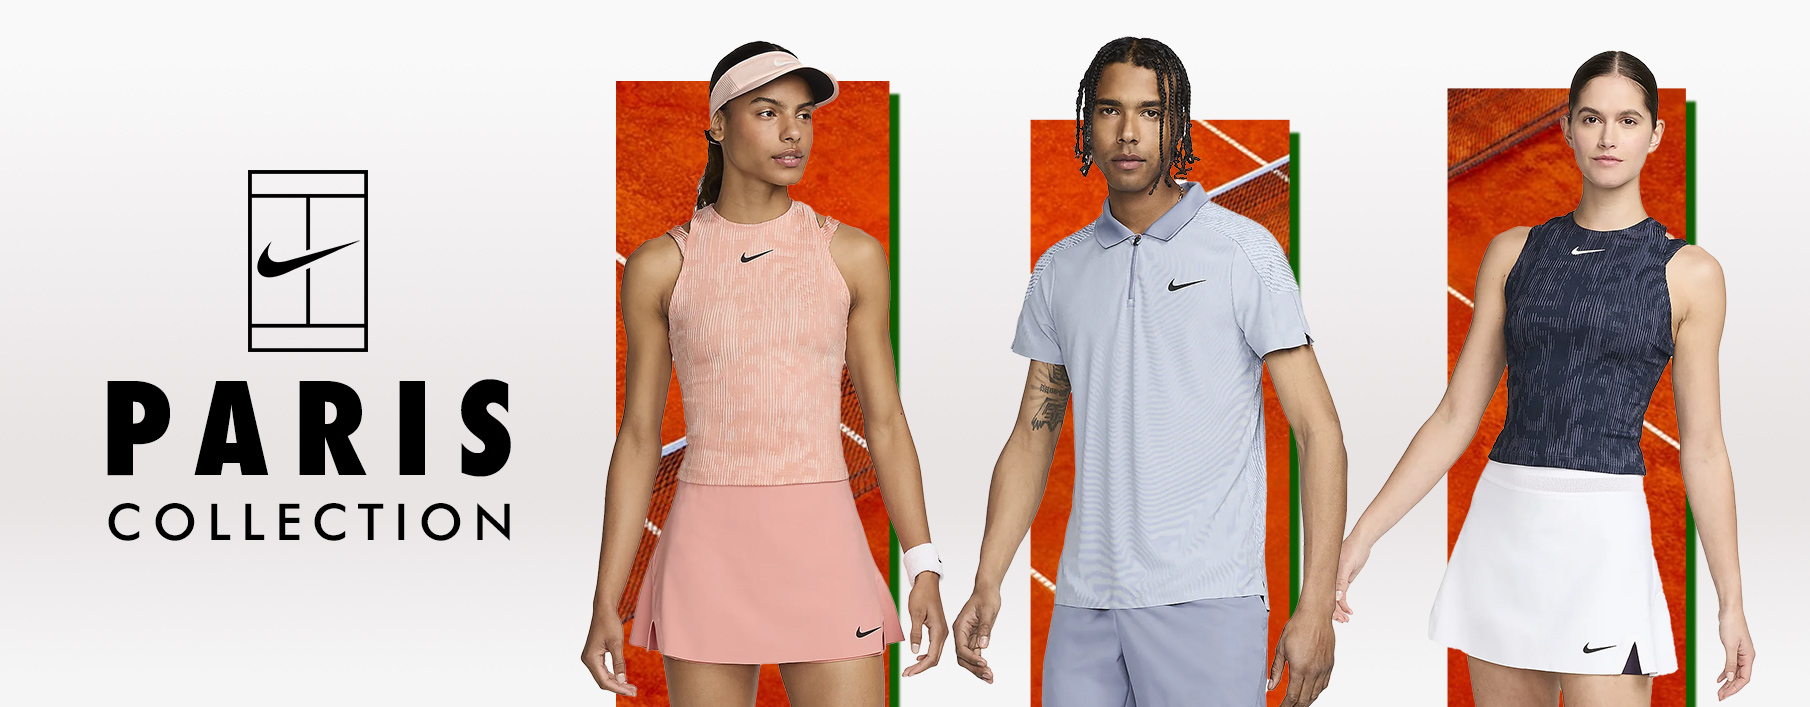 tennis nike paris french open roland garros apparel